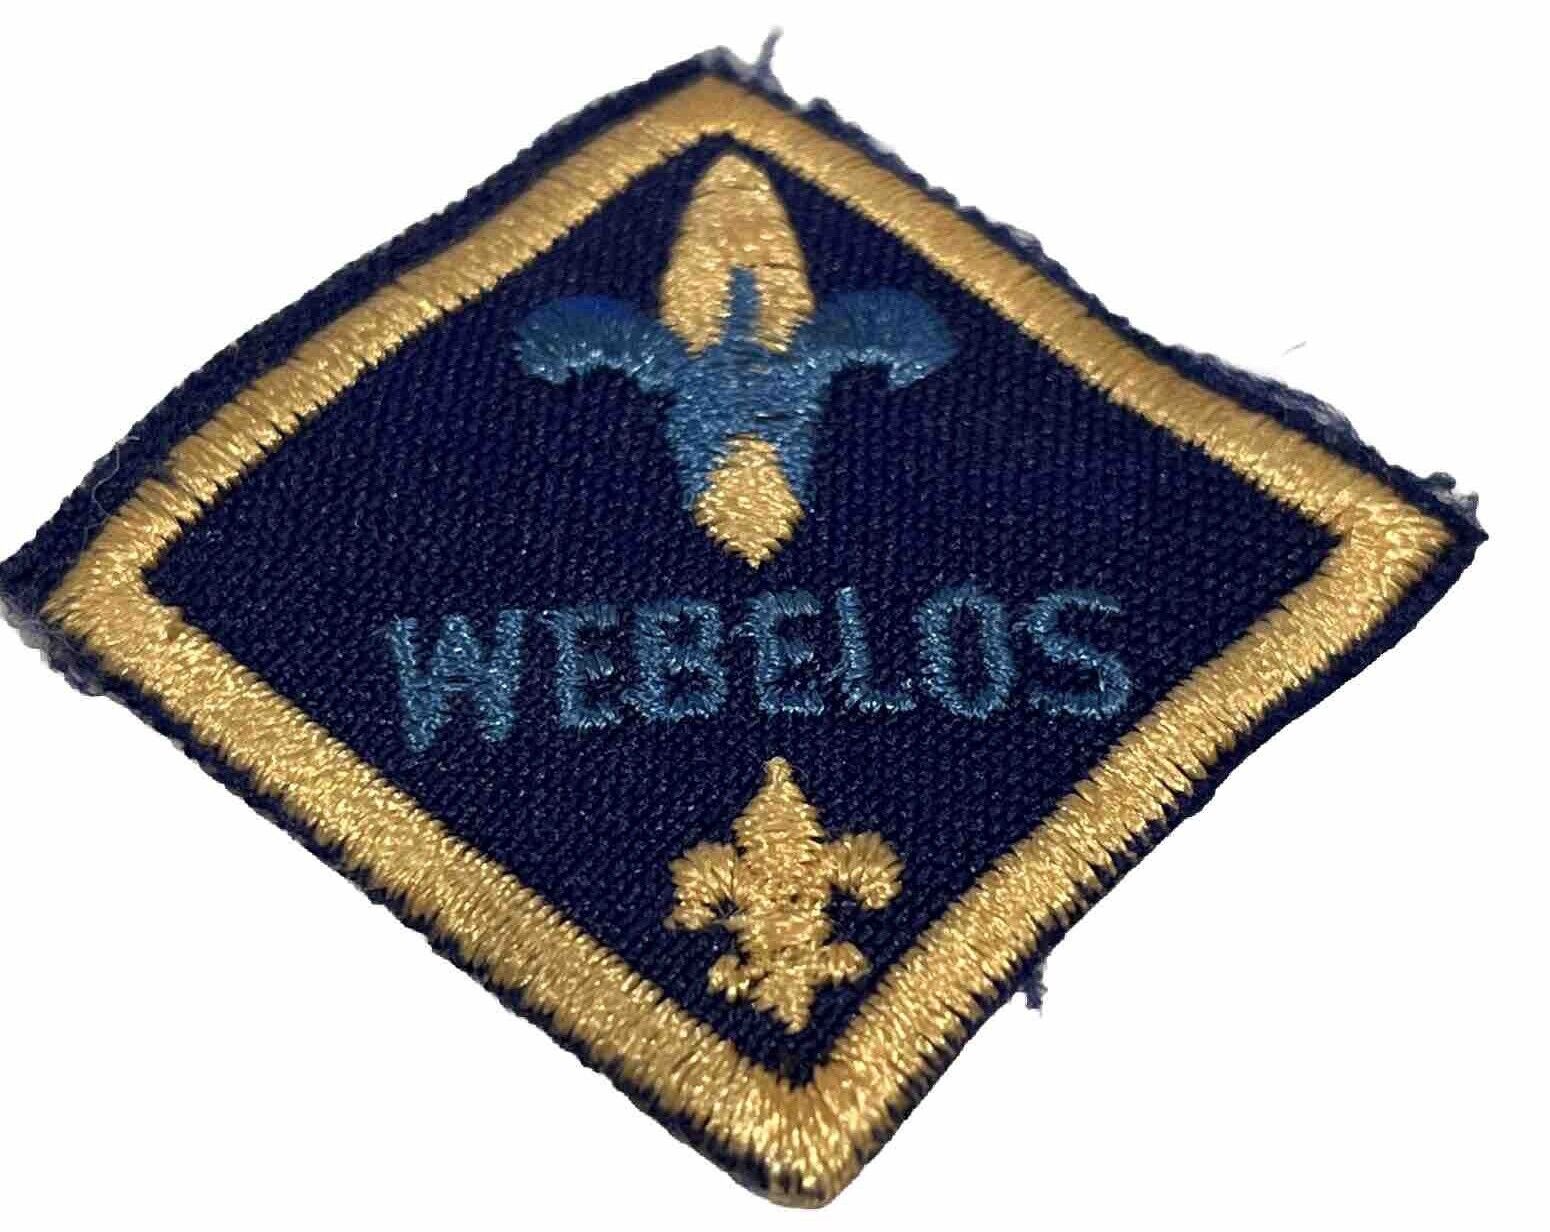 BSA Cub Scouts Webelos Rank Diamond Patch Vintage